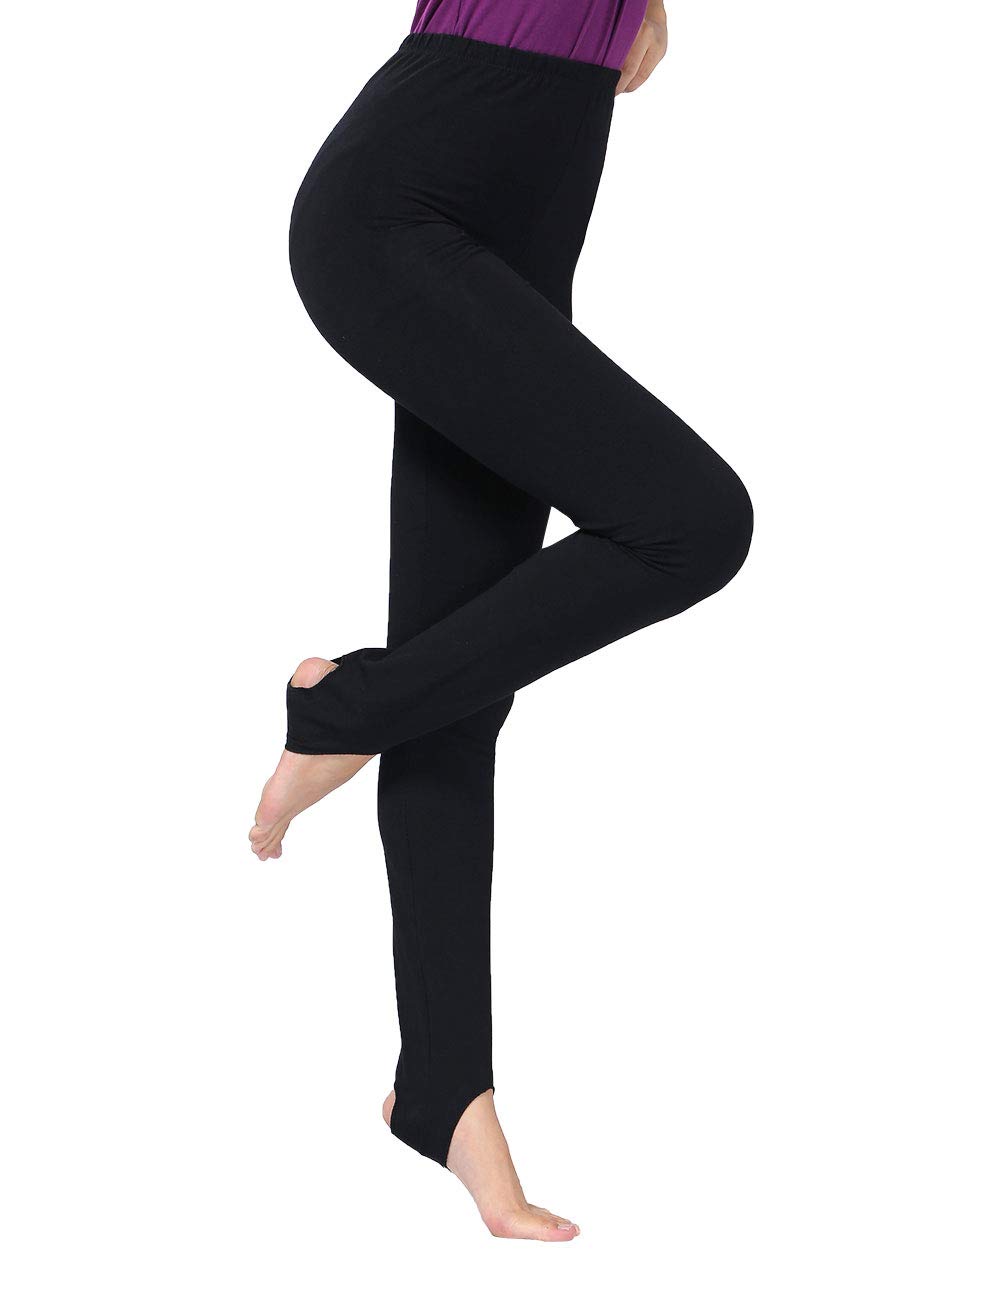 Girls Yoga Leggings Shiny Gymnastics Pants Ballet Dance Tight Trousers  Bottoms